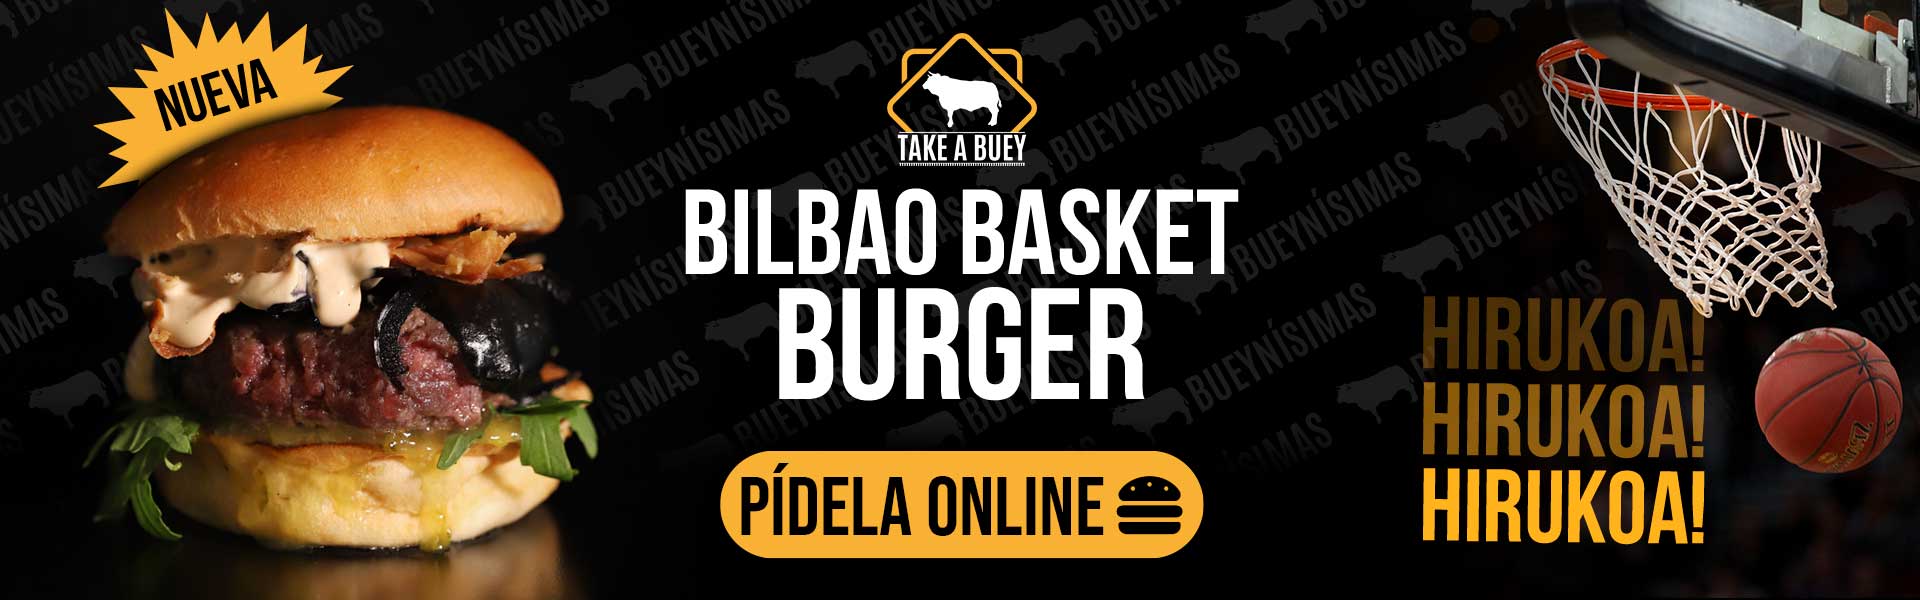 Bilbao Basket Burger